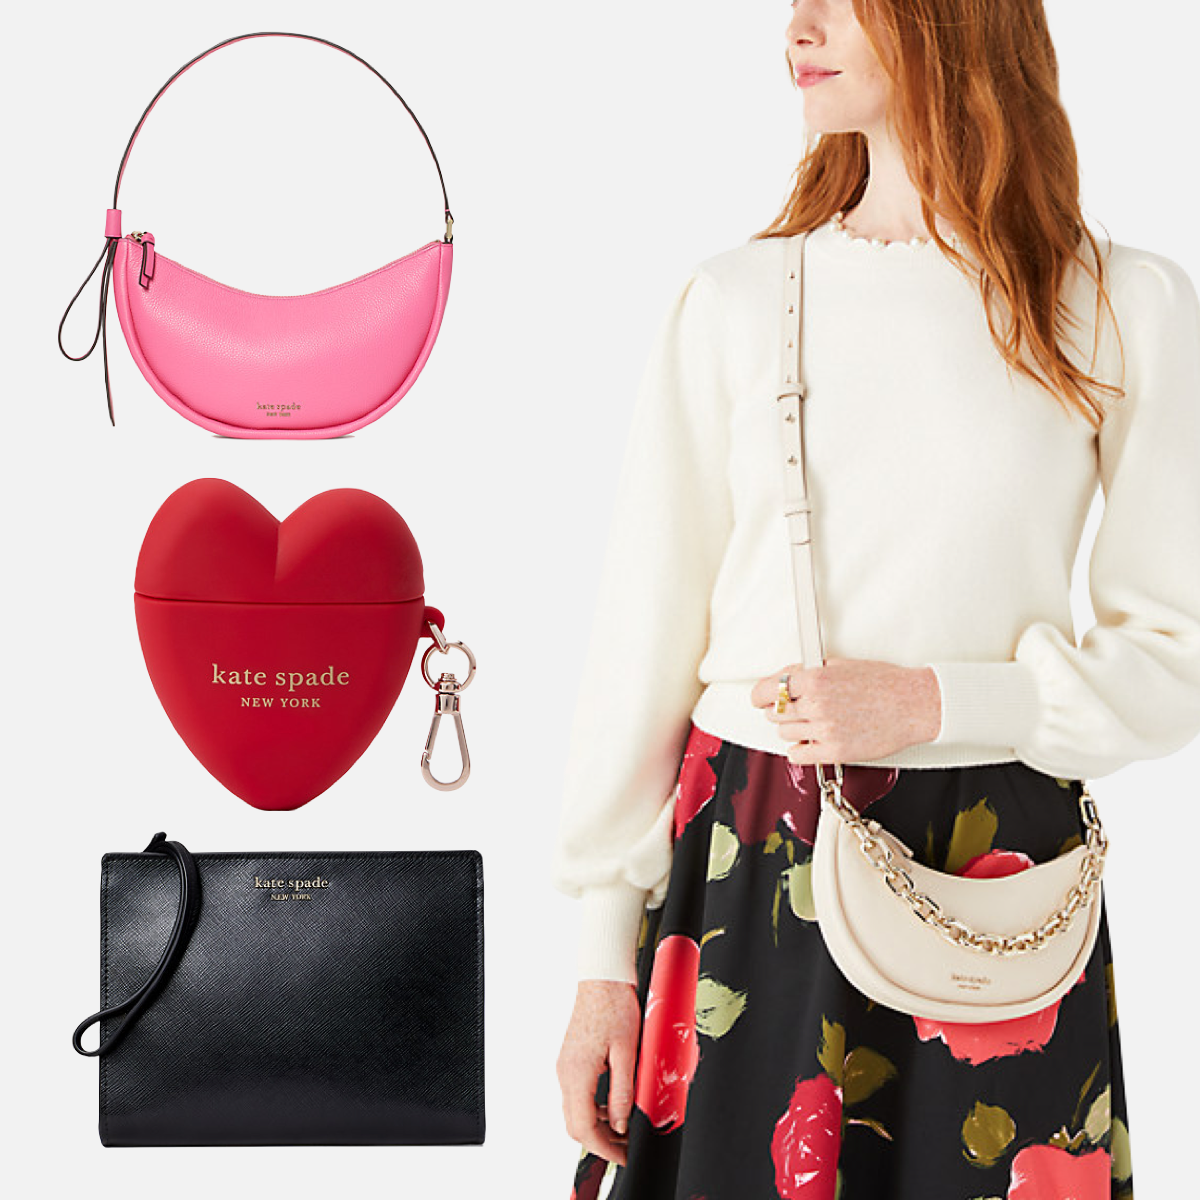 Kate Spade New York Spencer Flap Chain Wallet Crossbody Bag - Serene Pink